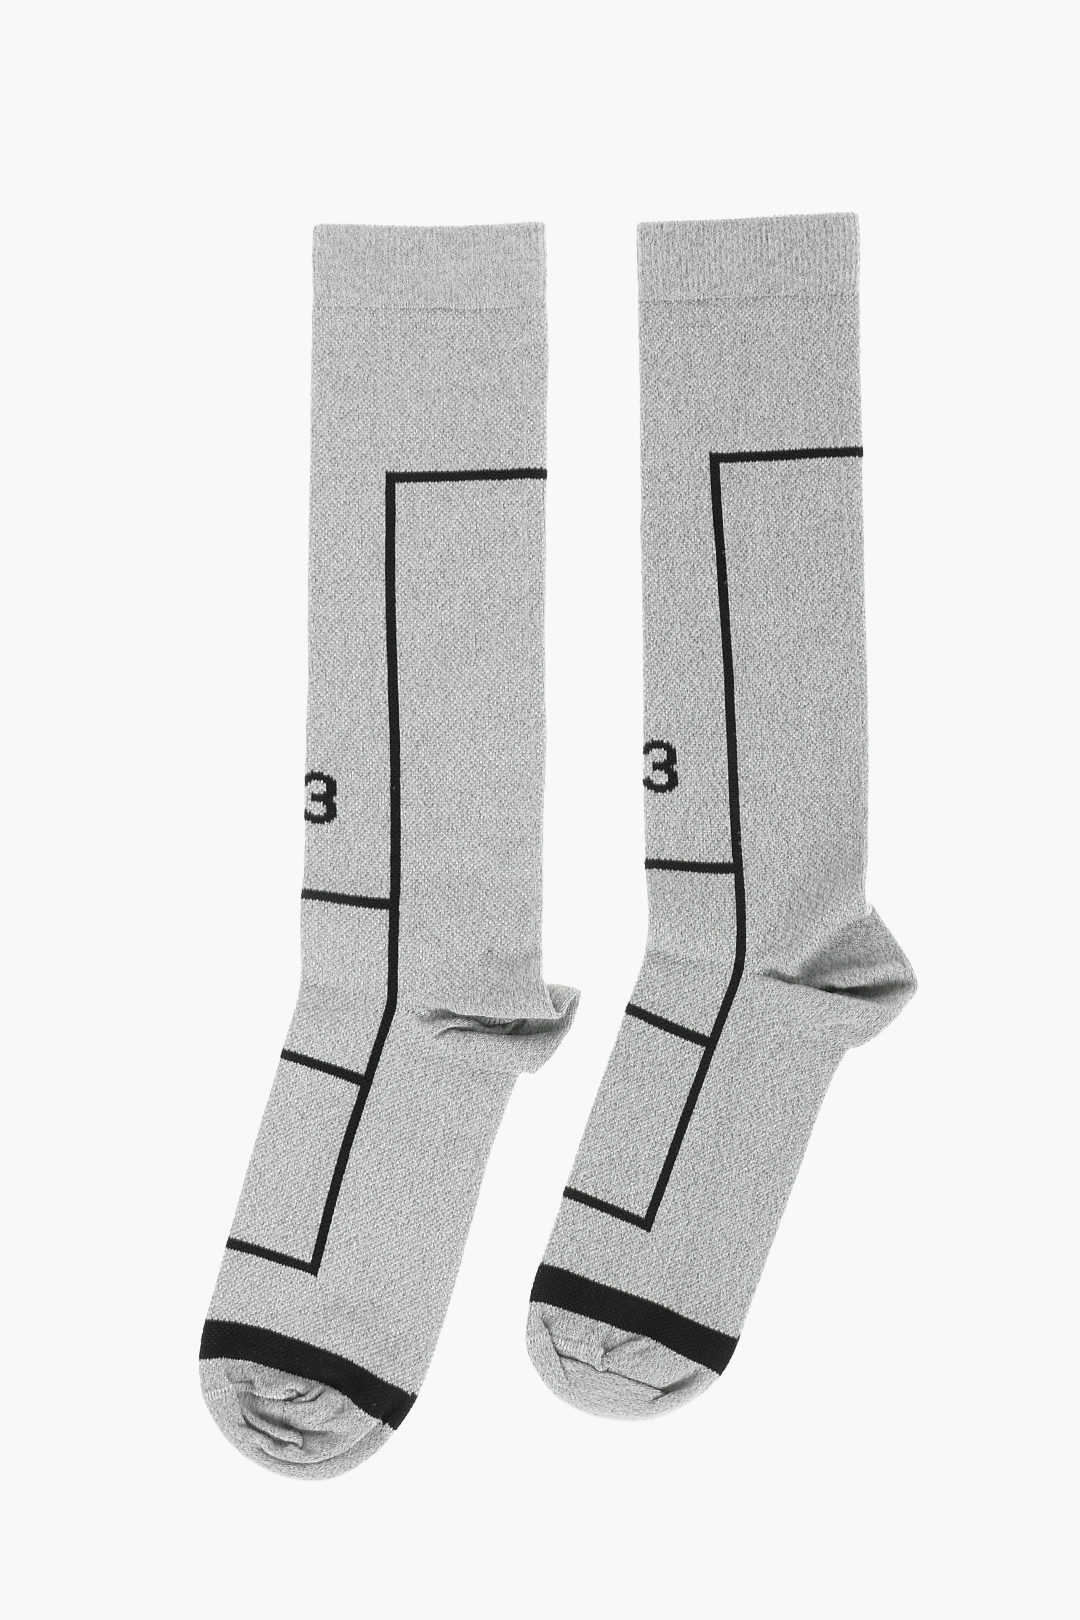 Y-3 by Yohji Yamamoto stretch socks unisex men Glamood Outlet